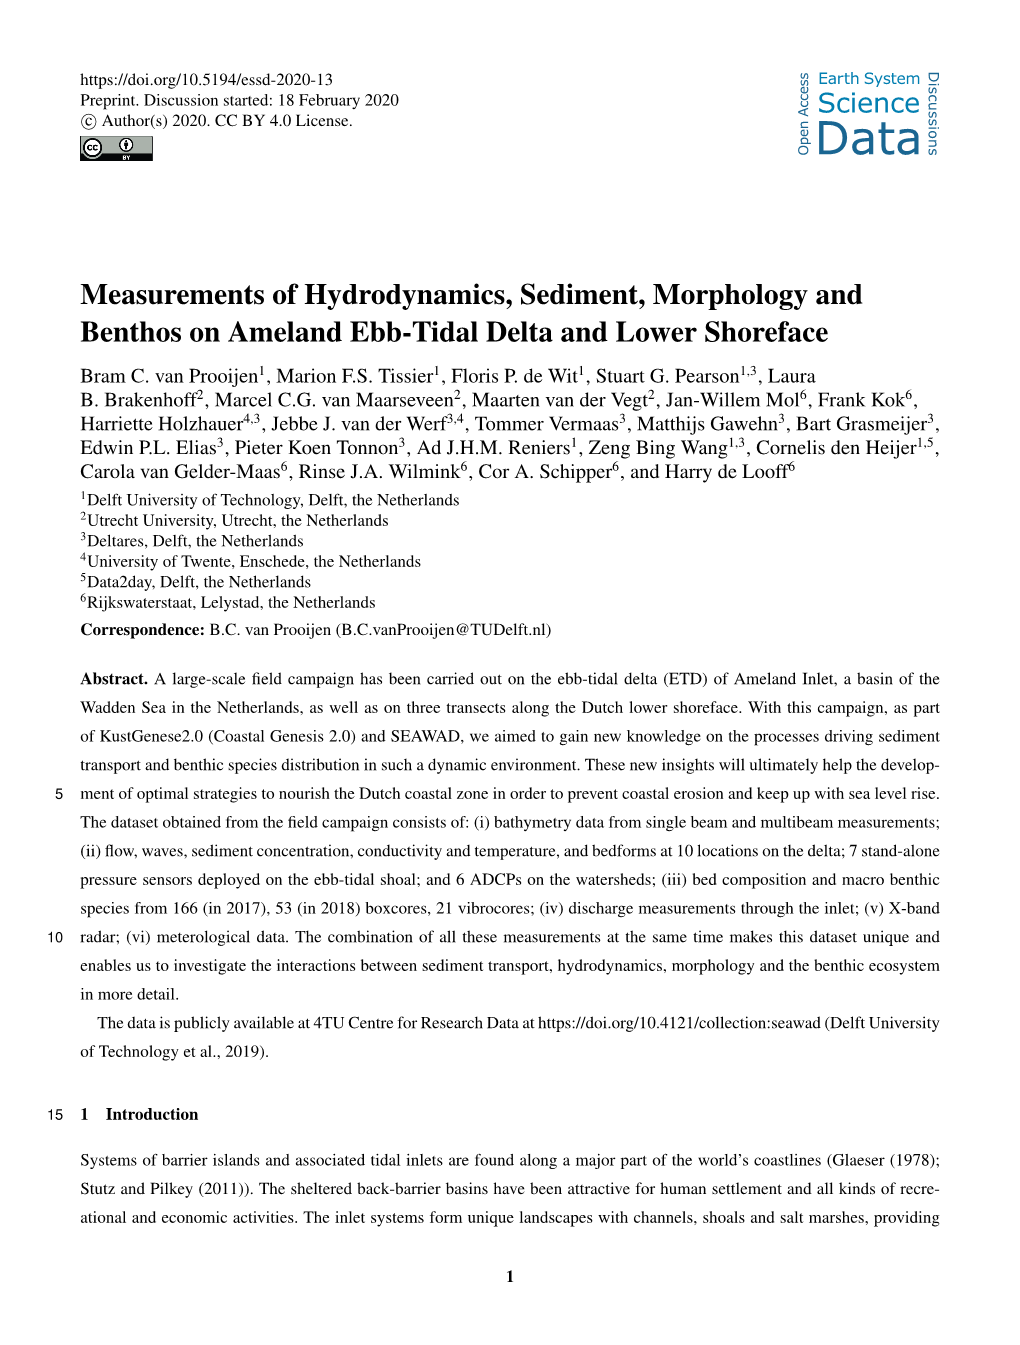 Measurements of Hydrodynamics, Sediment, Morphology and Benthos on Ameland Ebb-Tidal Delta and Lower Shoreface Bram C